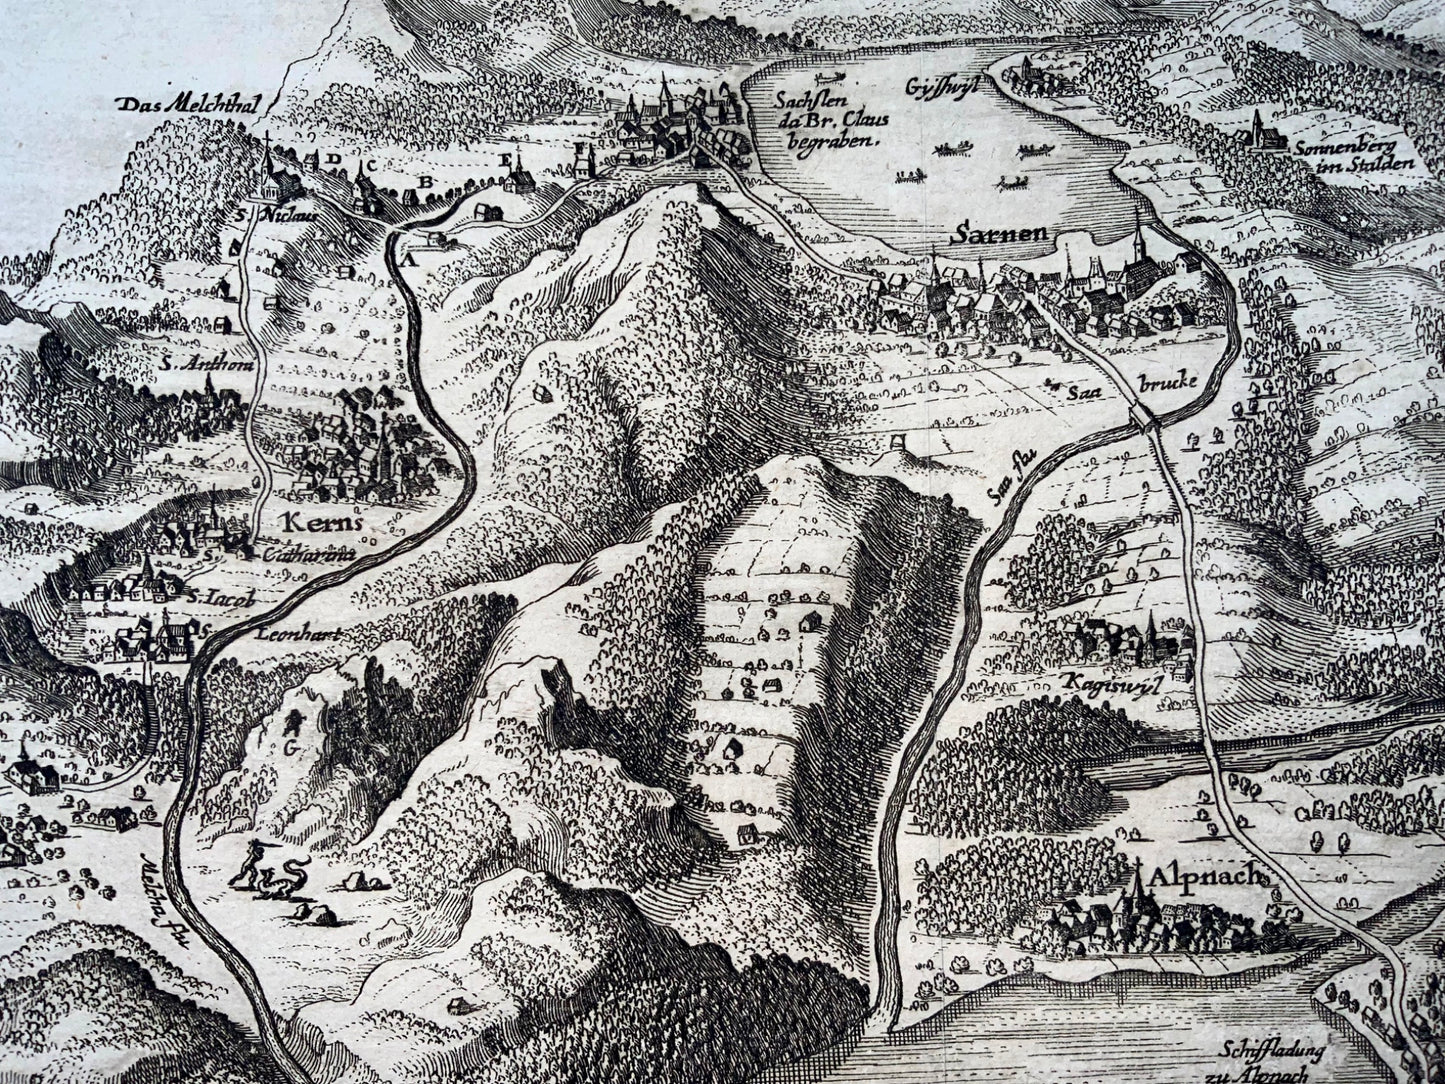 1723 Untervaldo, mappa a volo d'uccello, Sarnen, Stans, Kerns, Alpnach, Svizzera